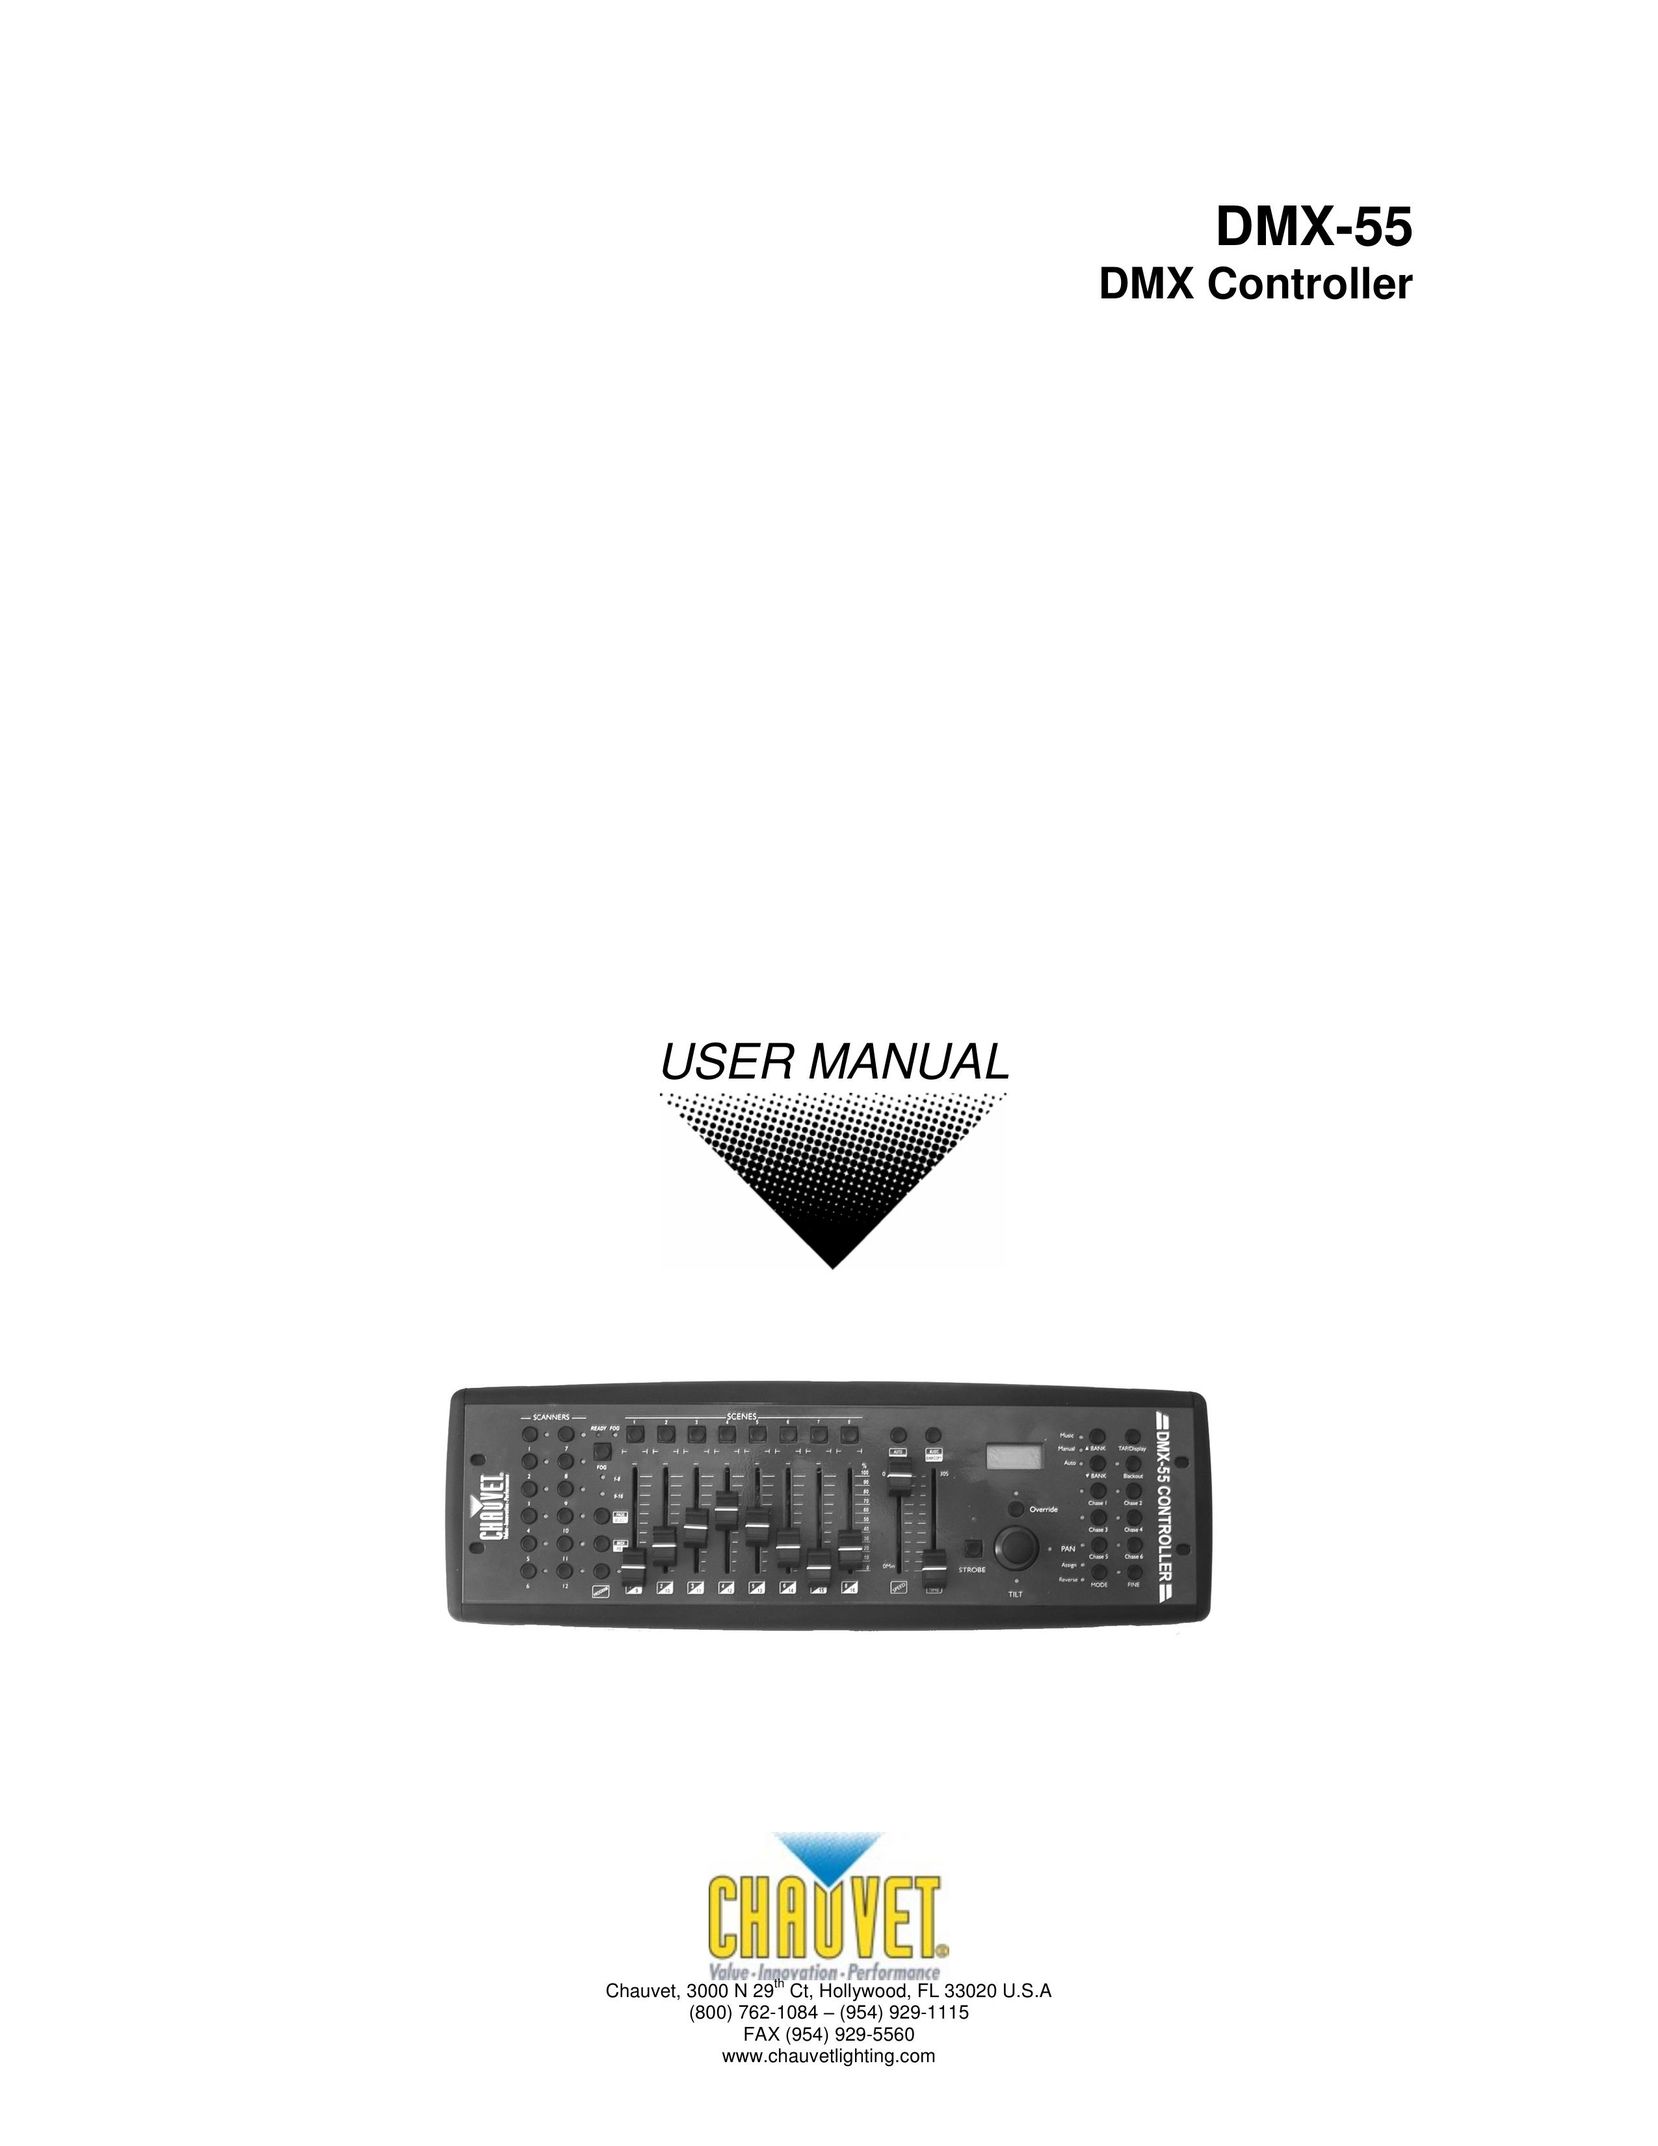 Chauvet DMX-55 DMX Switch User Manual